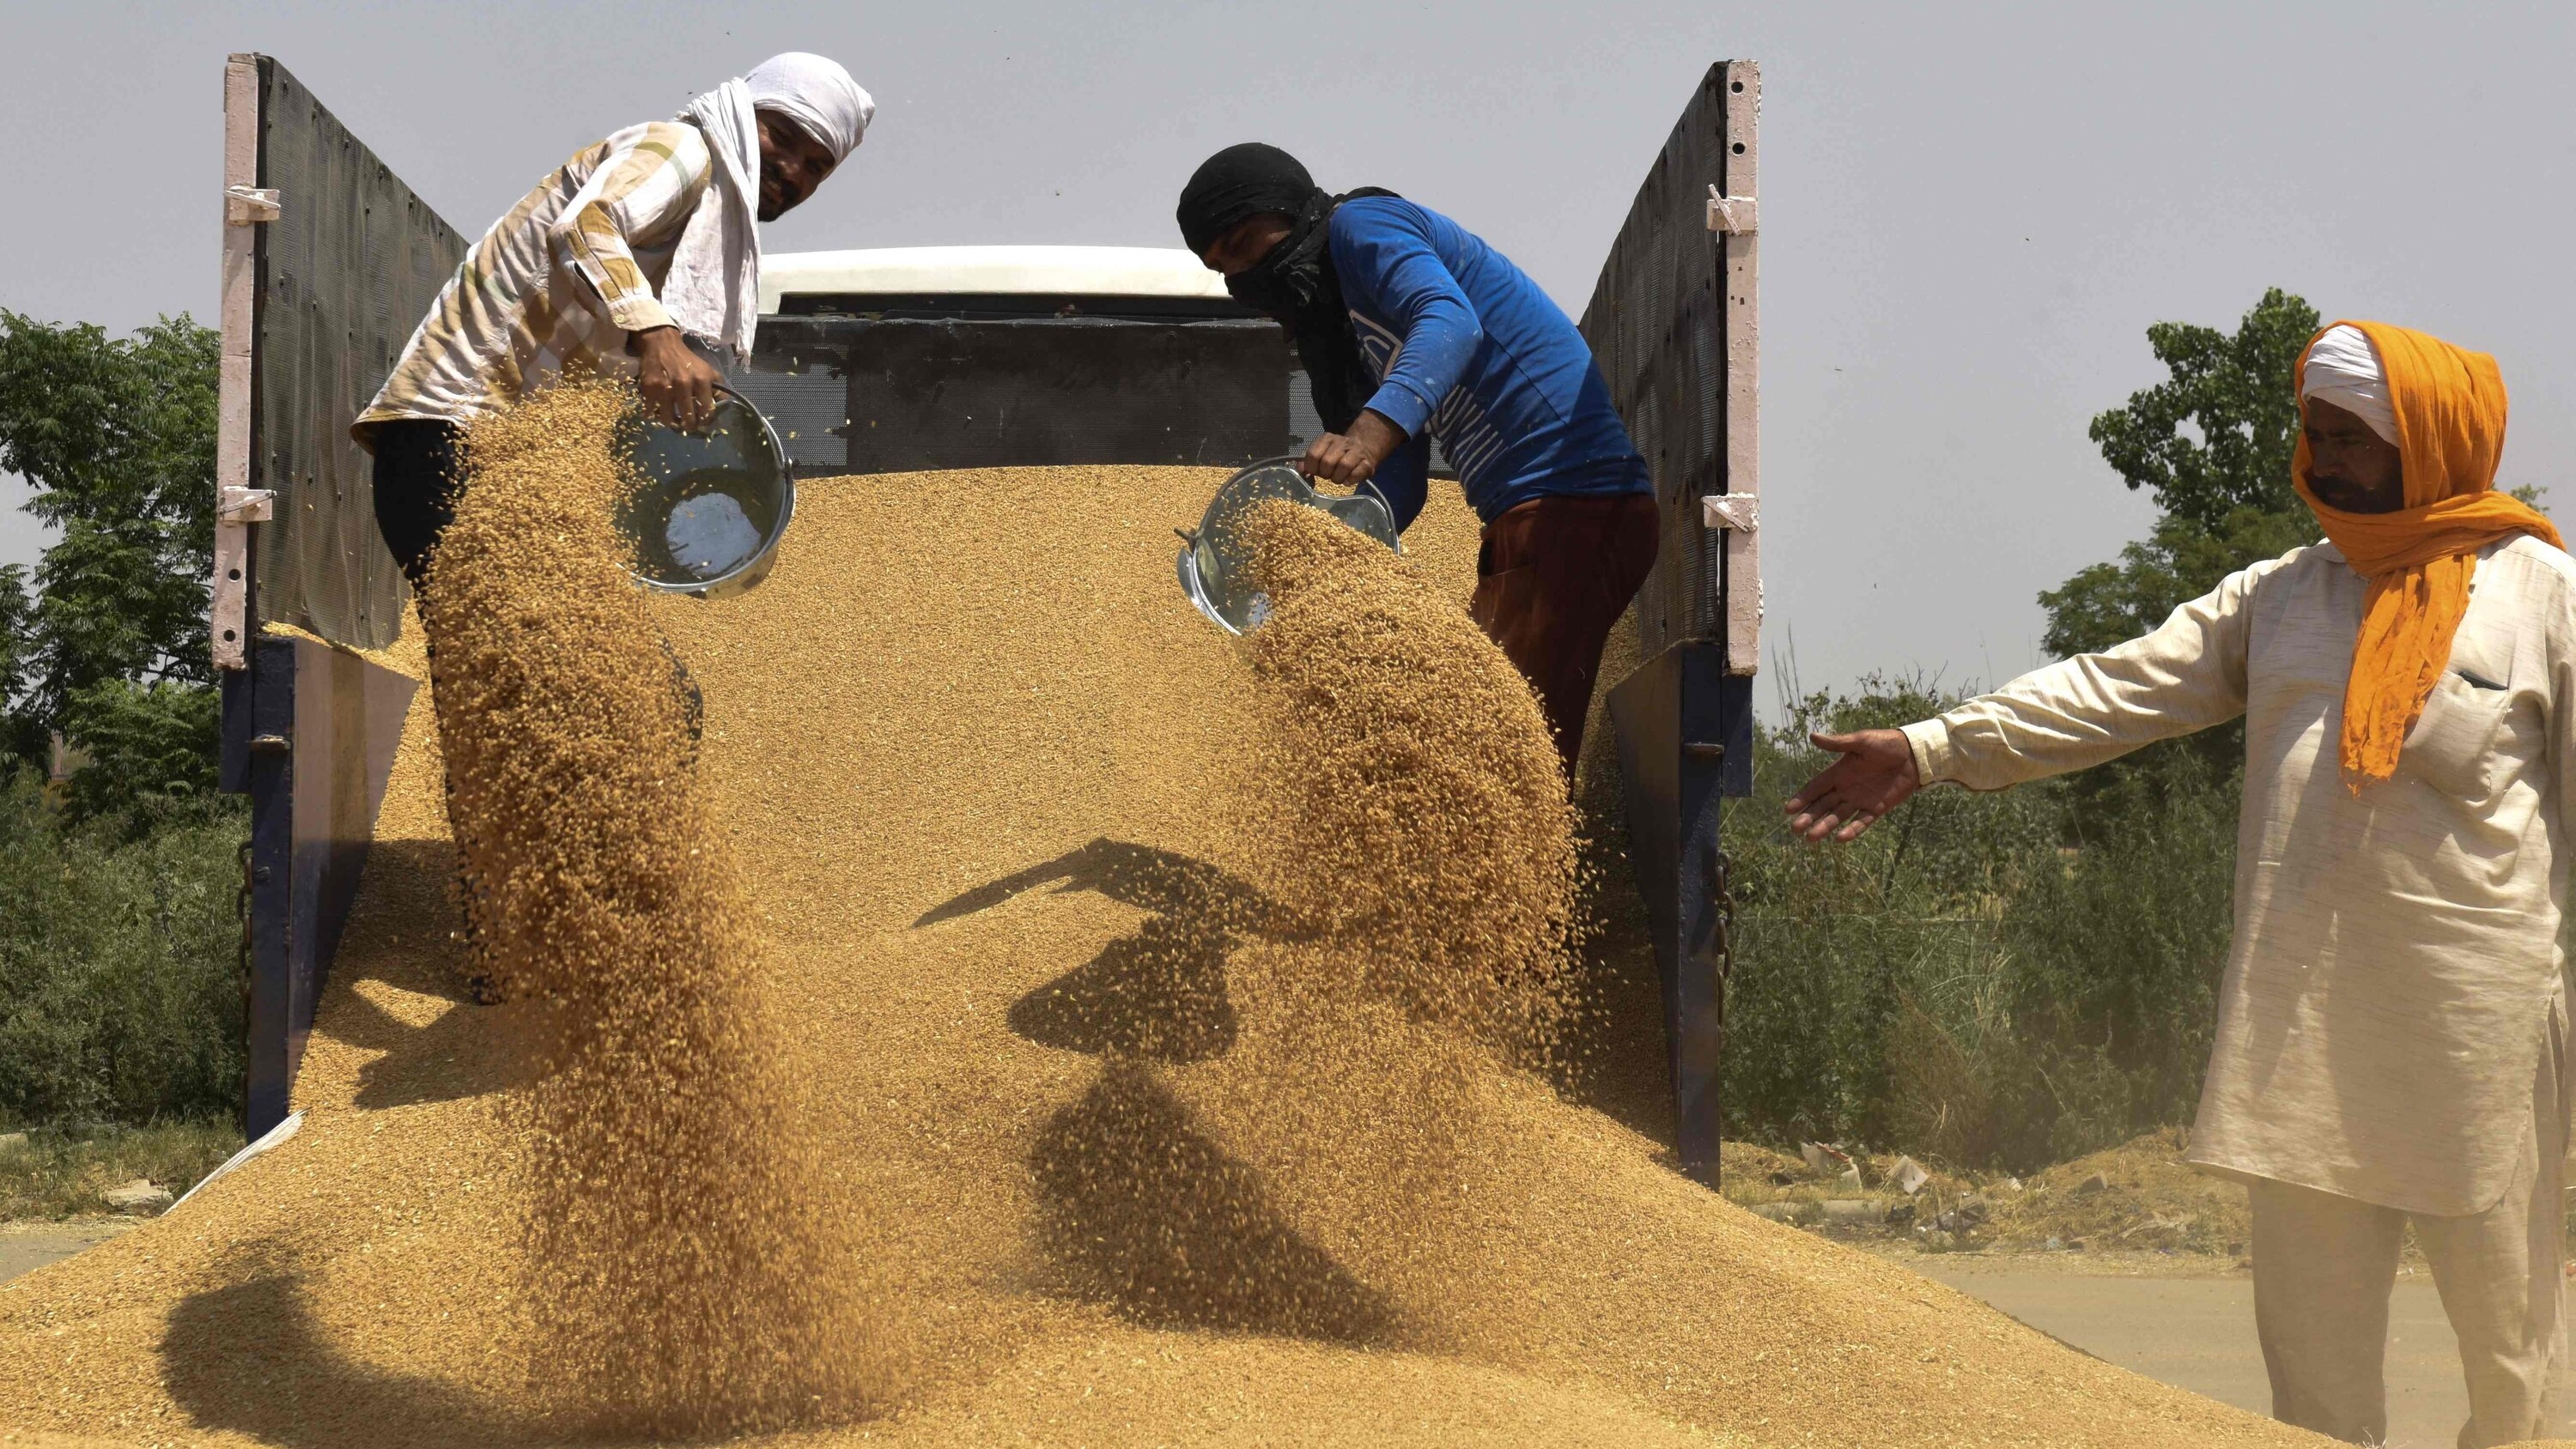 In northern india they harvest their wheat. Индийское зерно. Экспорт зерна. Индия пшеница. Индия зерновые культуры.